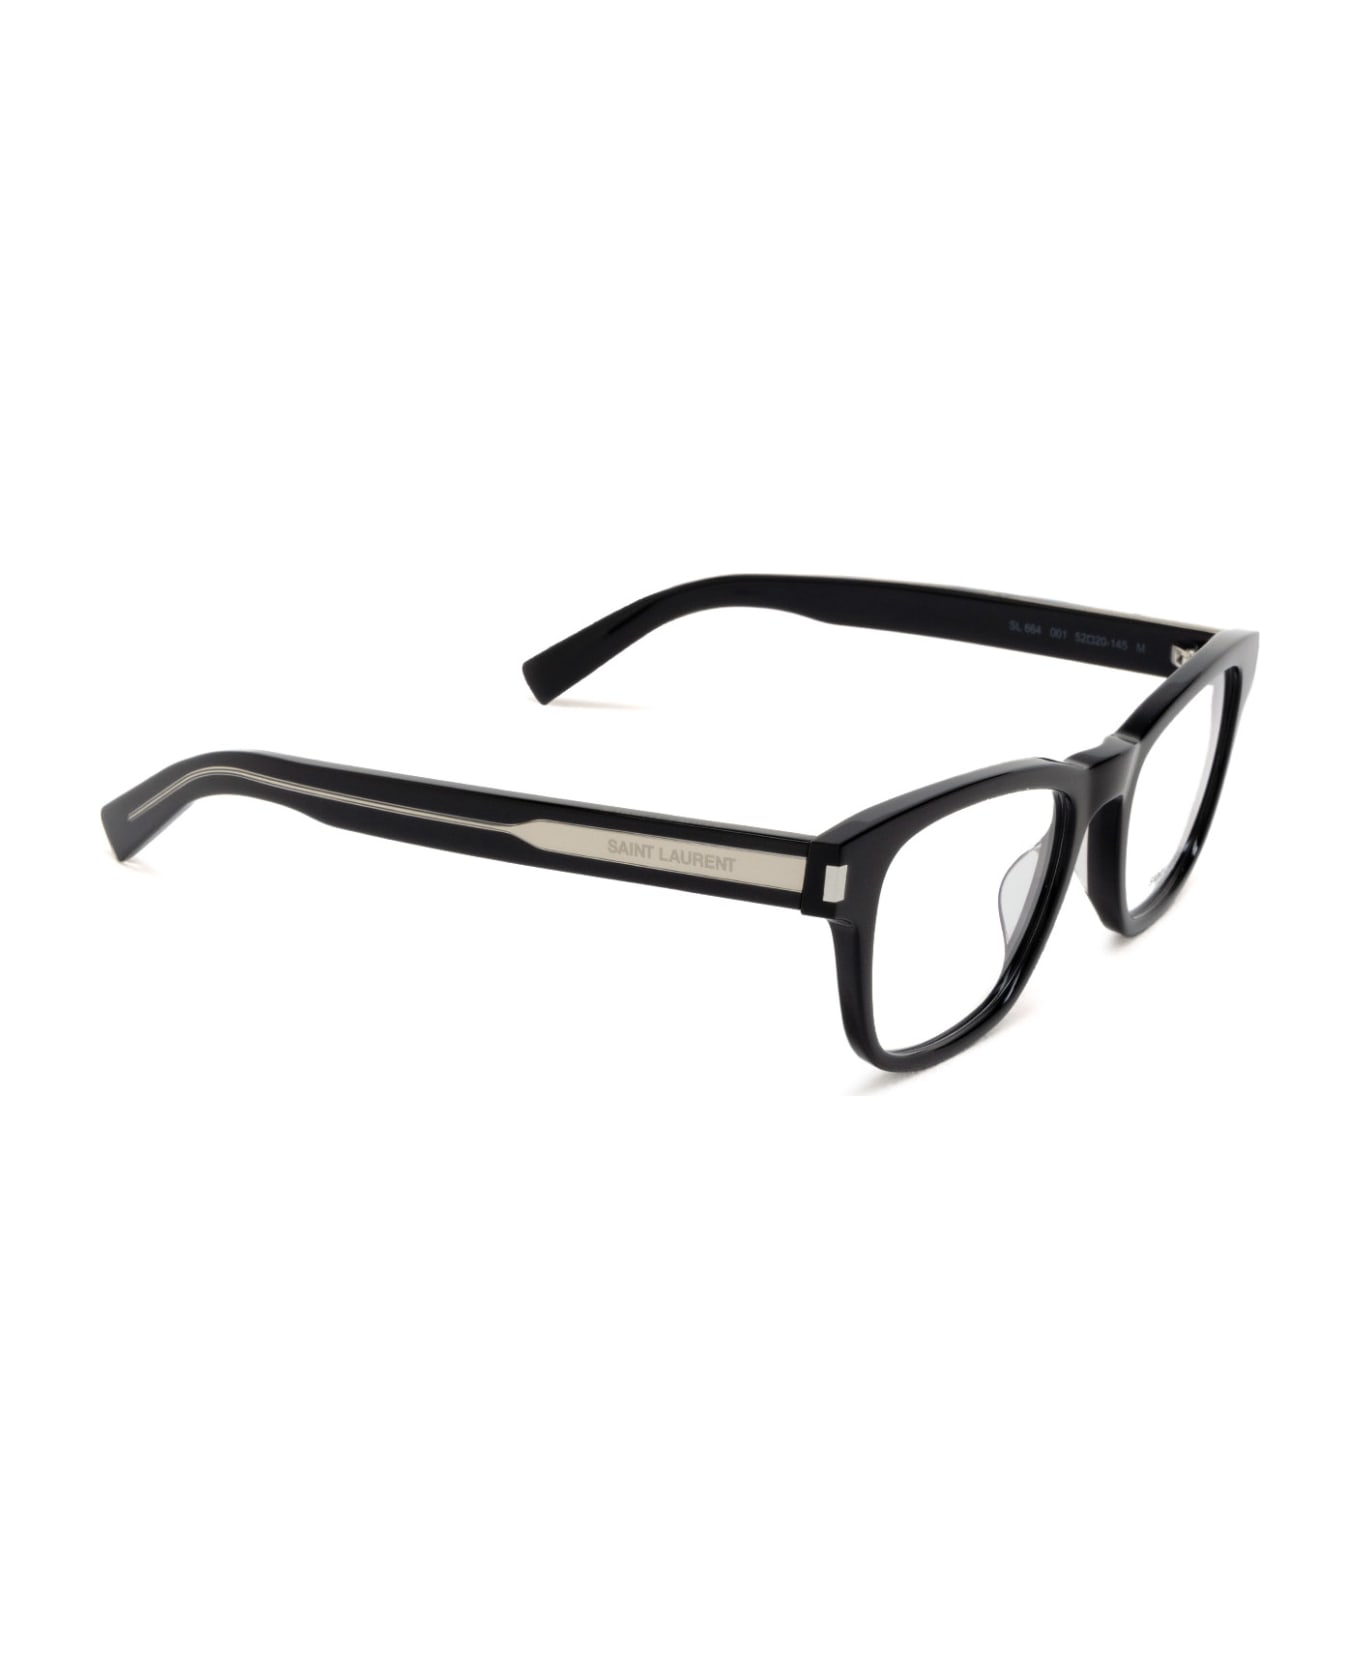 Saint Laurent Eyewear Sl 664 Black Glasses - Black